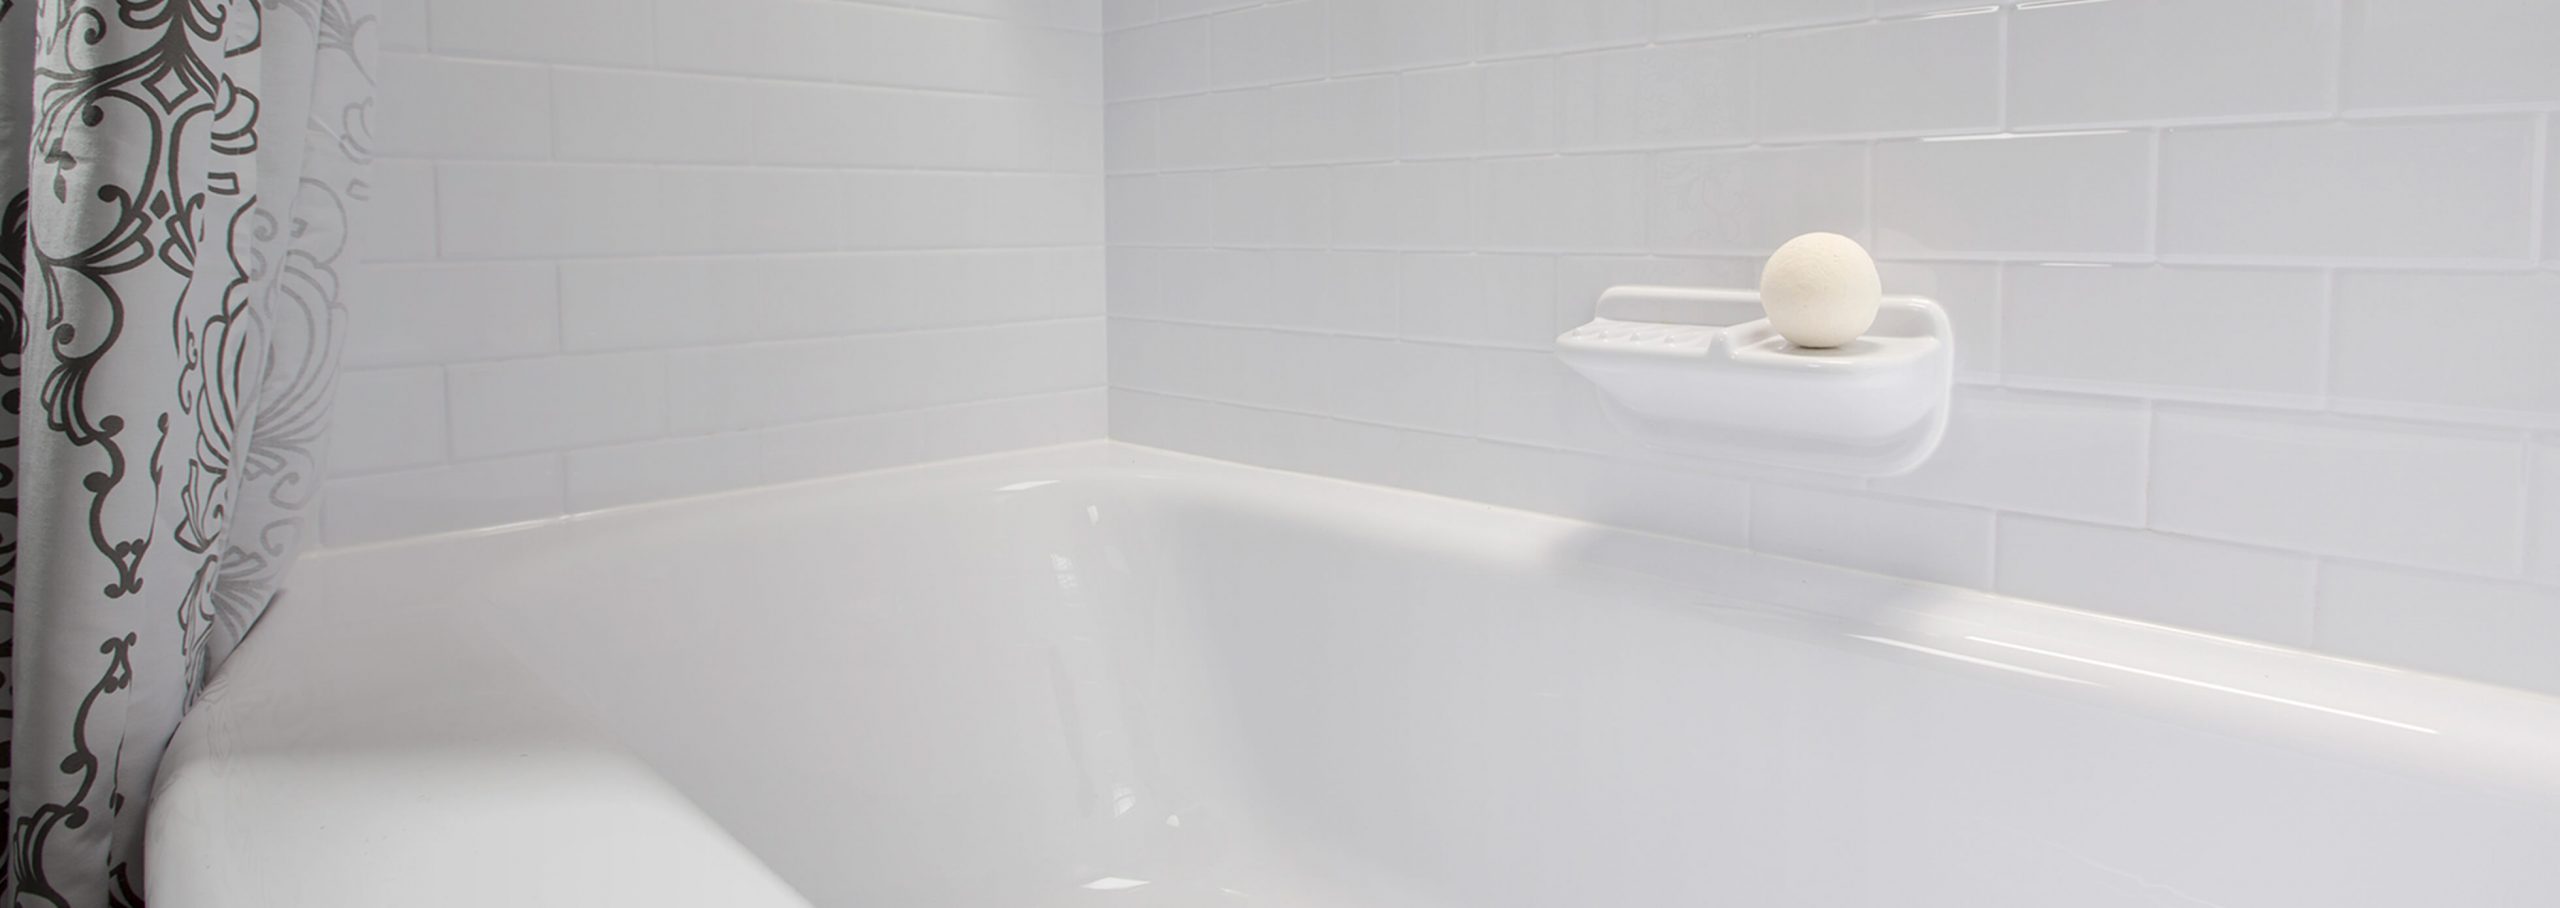 https://www.bathfitter.com/wp-content/uploads/2020/09/1960px-Bath-Accessories-Soap-Dish-2x-scaled.jpg